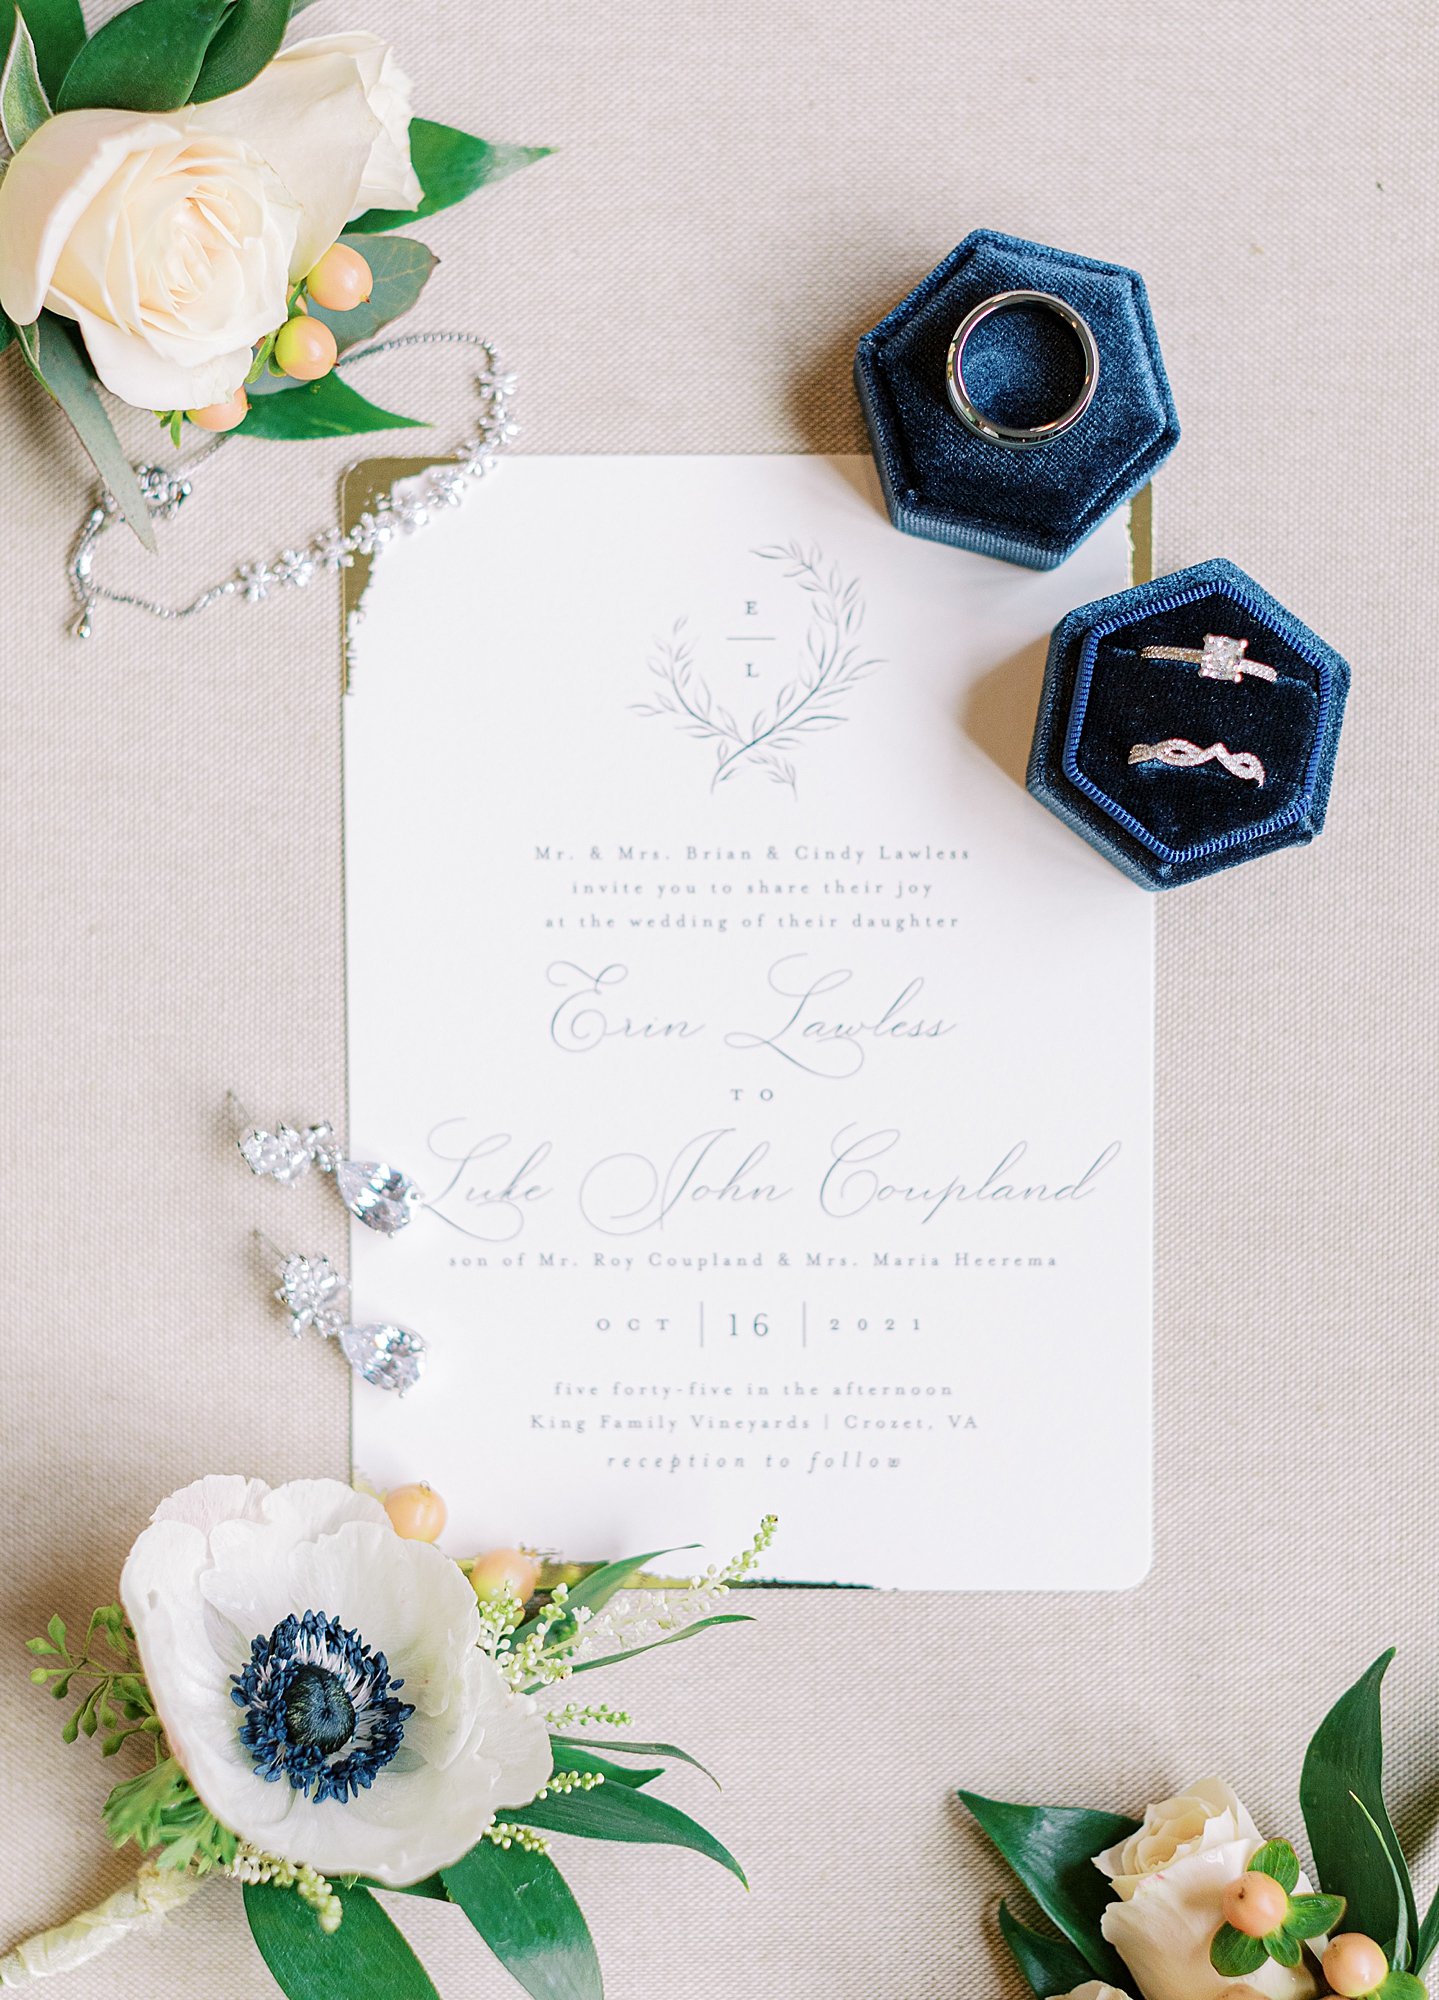 Wedding invitation by minted.